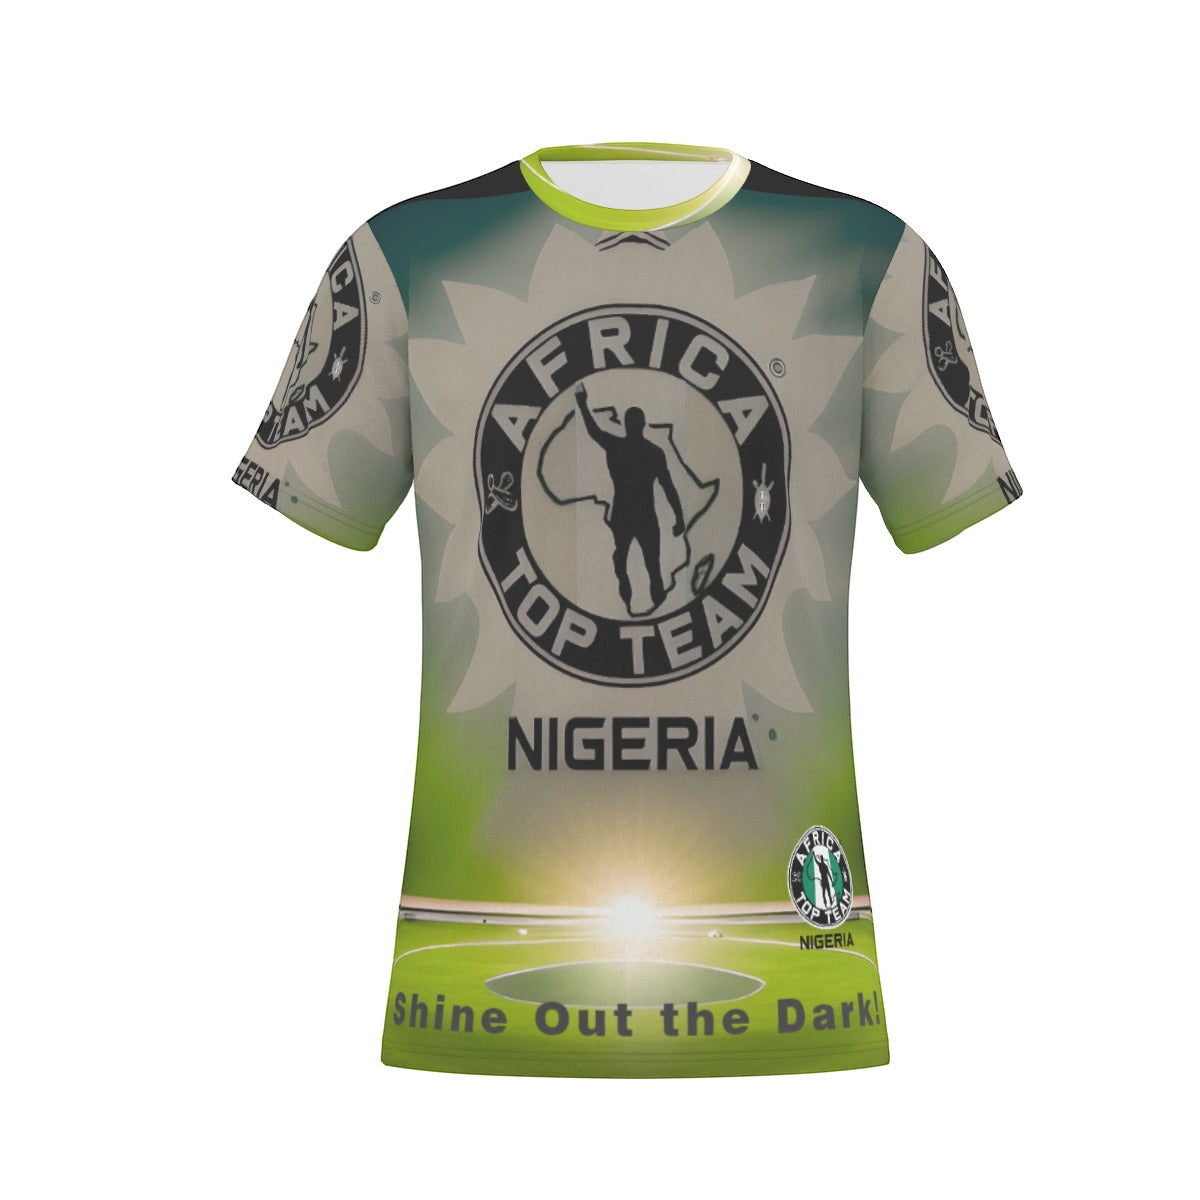 Africa Top Team Nigeria Shine Out the Dark T-Shirt